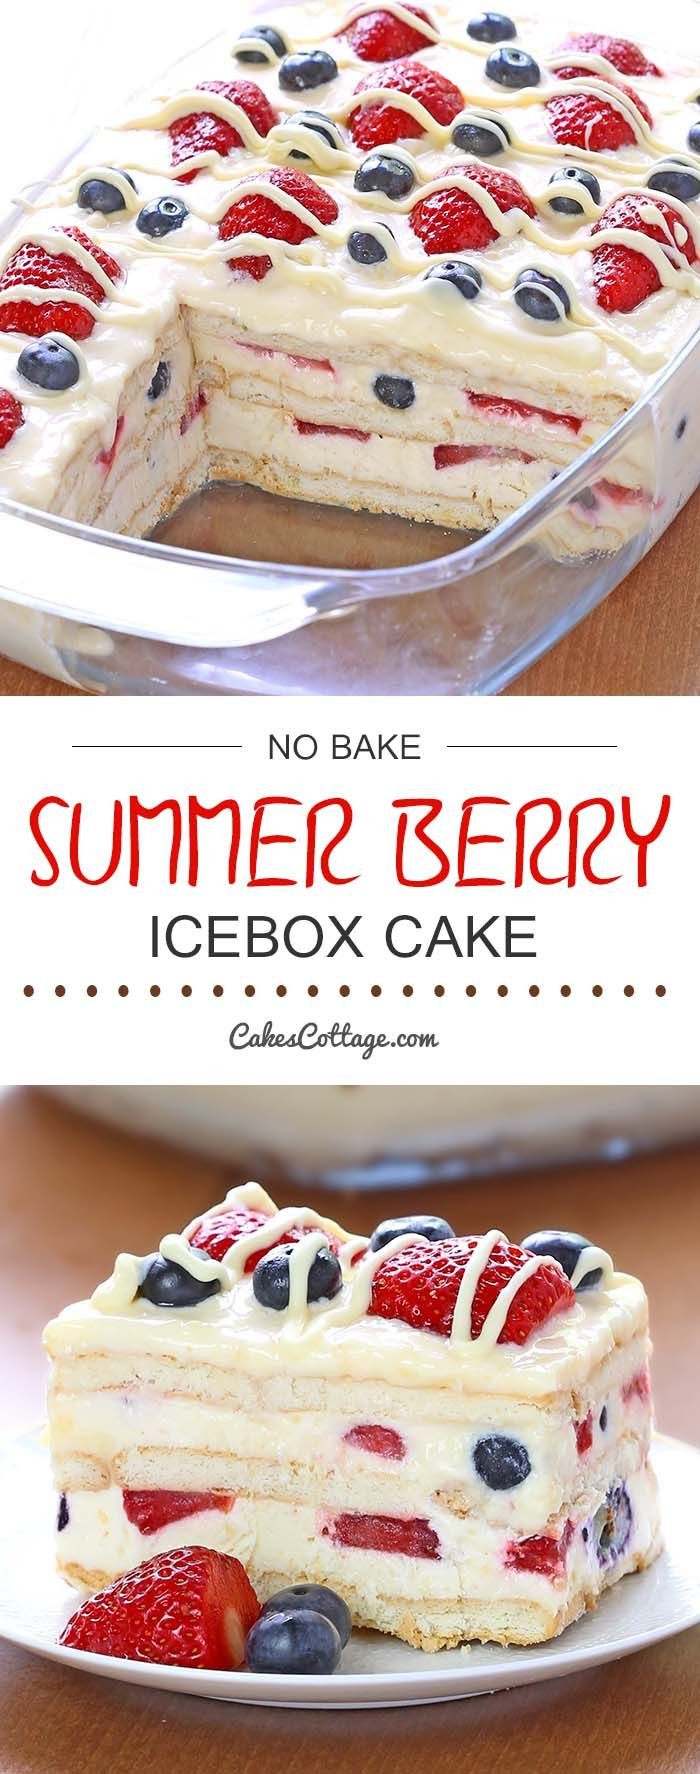 Easy No Bake Summer Desserts
 No Bake Summer Berry Icebox Cake Recipe